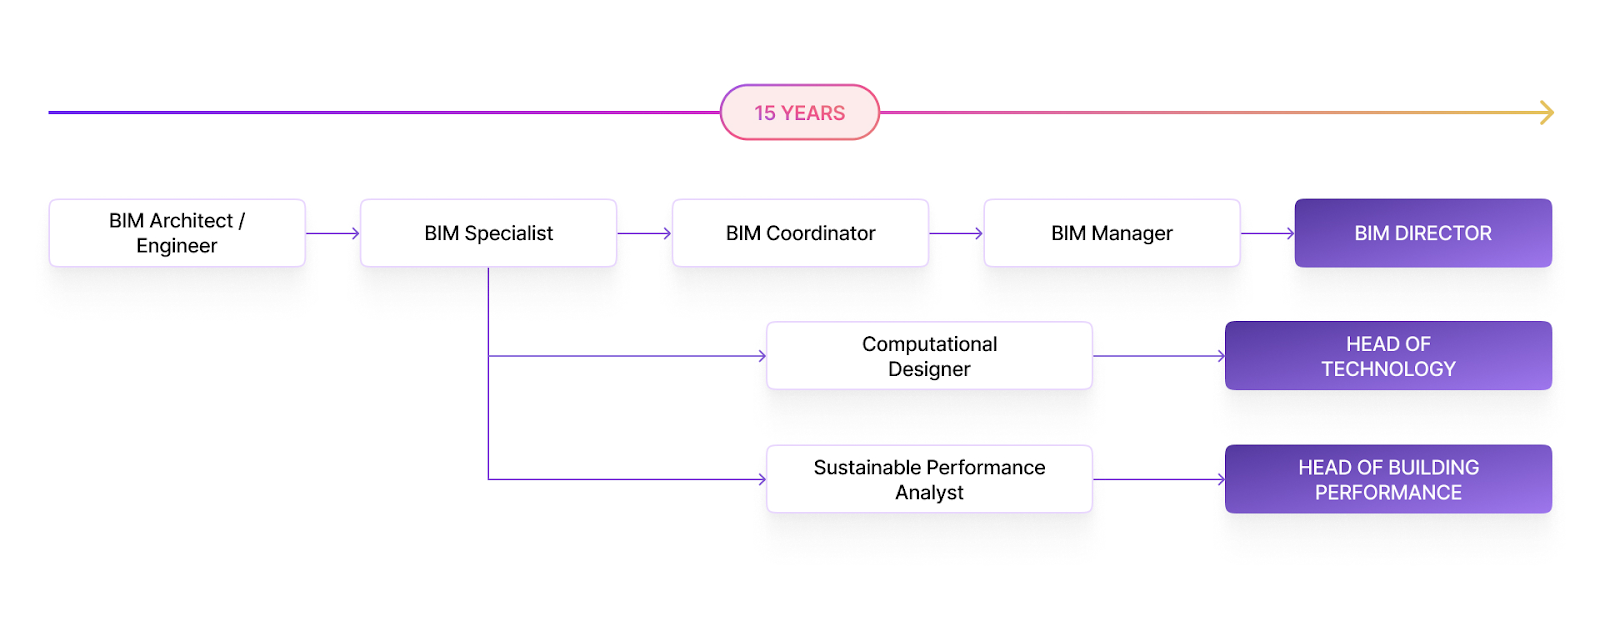 Career trajectory of a BIM professional